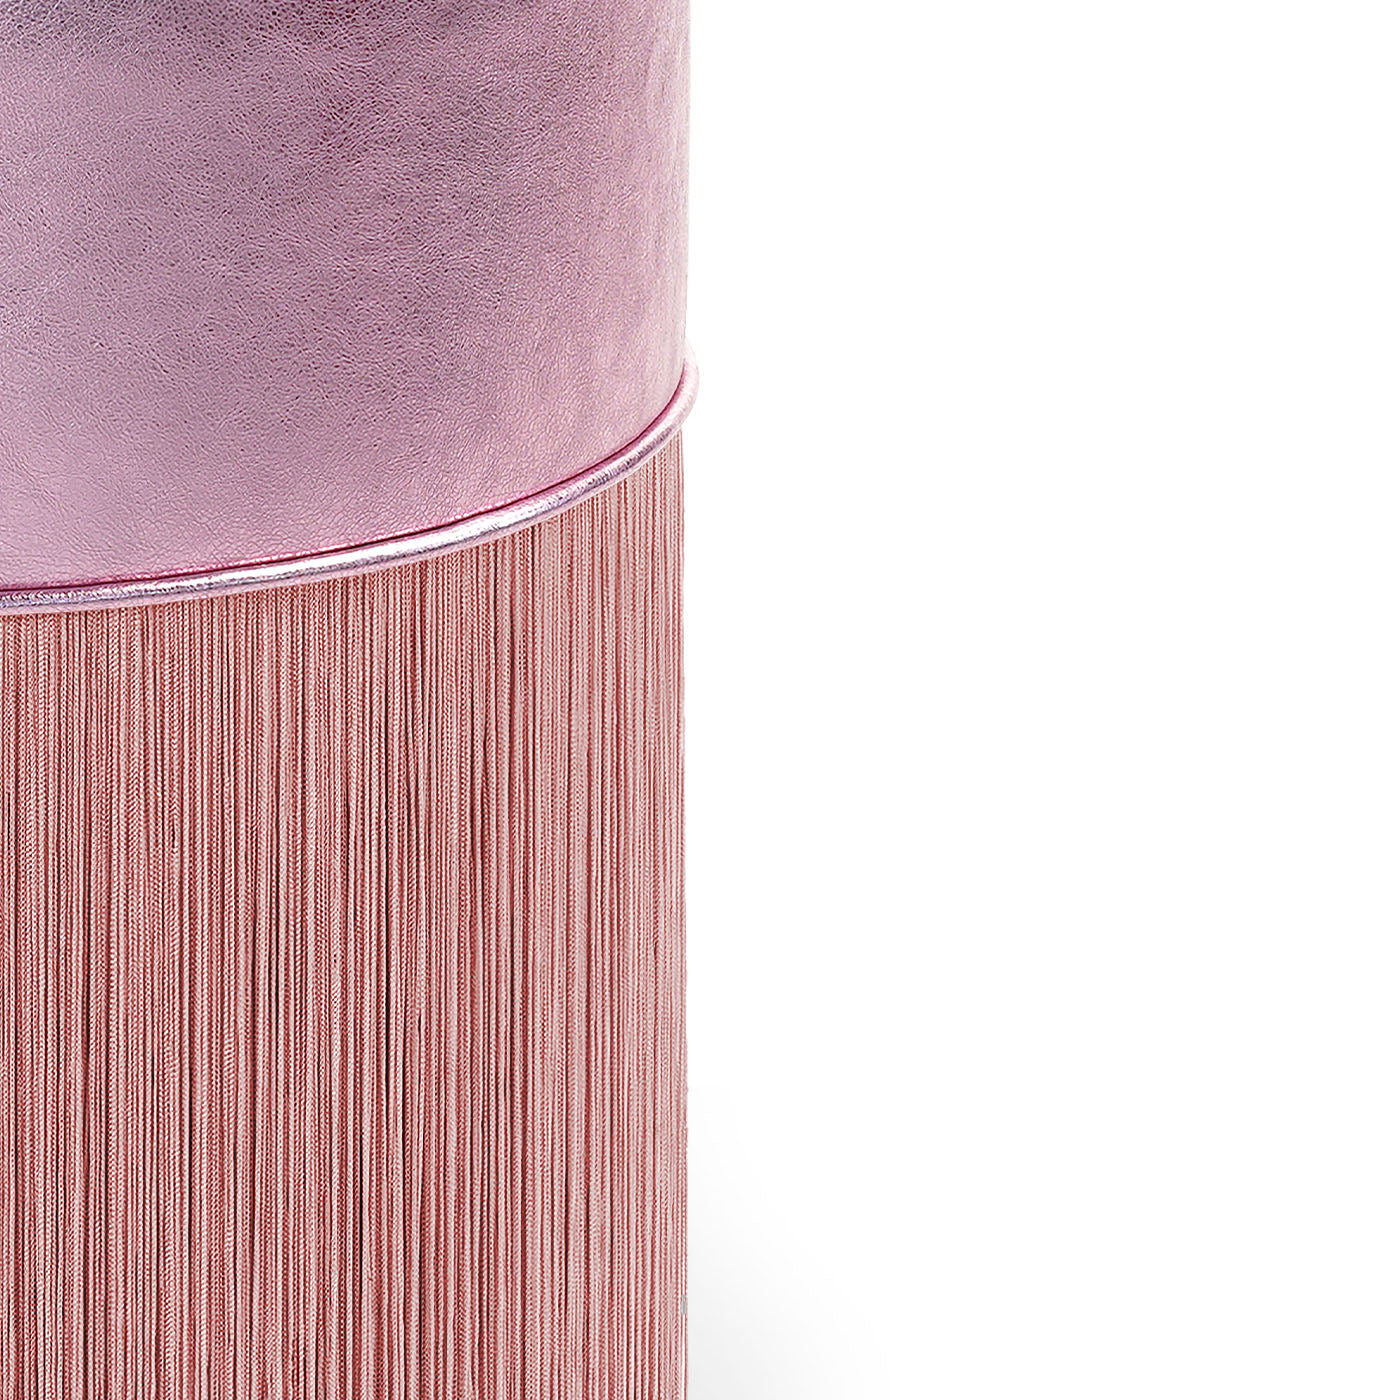 Puf de piel metalizada rosa brillante nº 2 de Lorenza Bozzoli - Vista alternativa 1